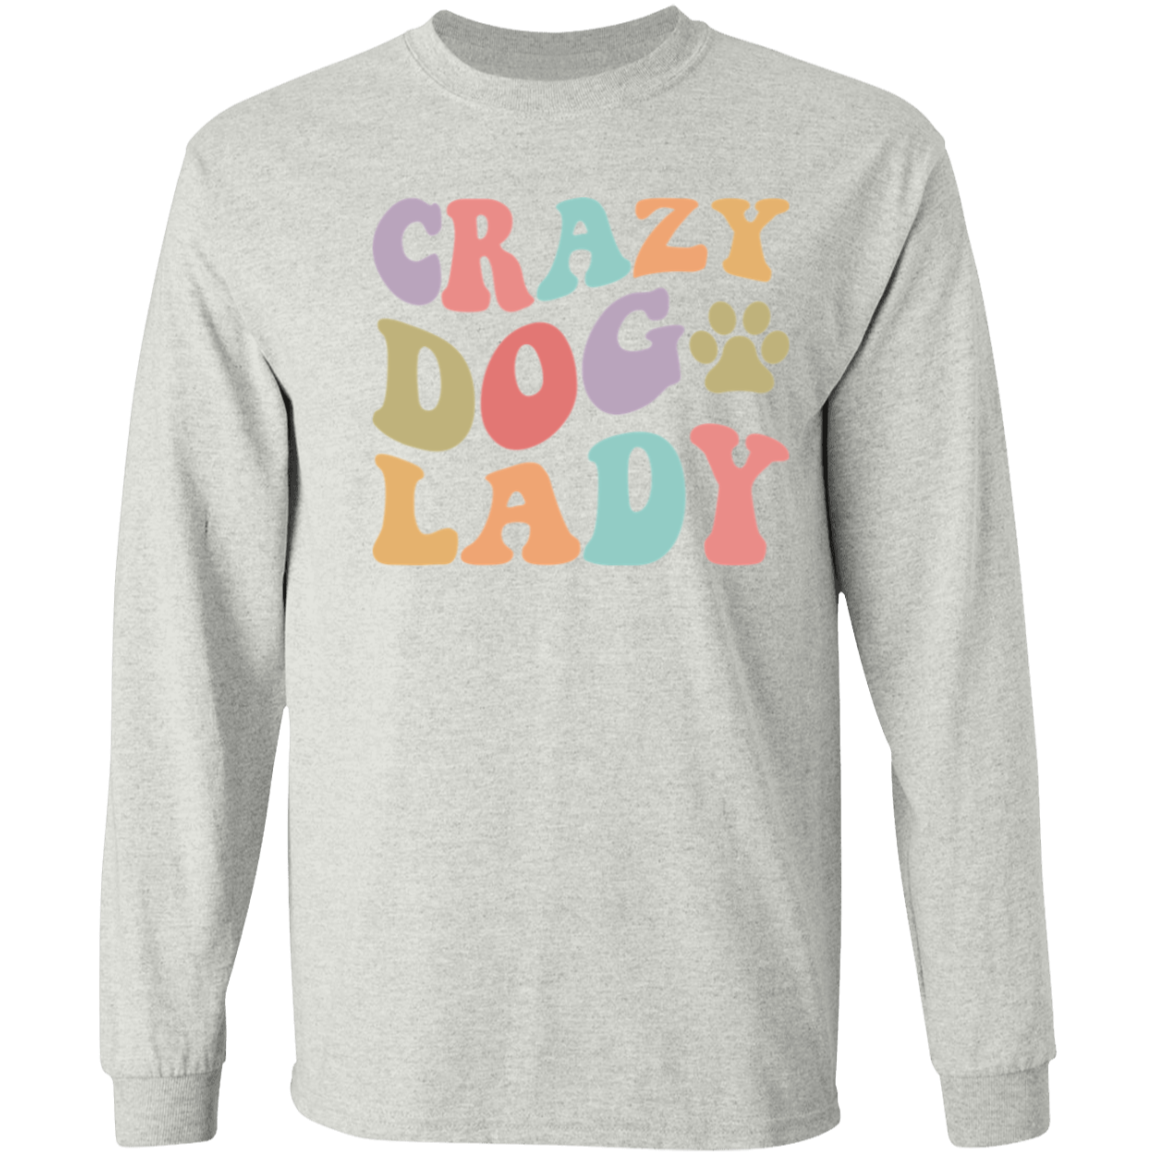 Crazy Dog Lady Rescue Long Sleeve T-Shirt